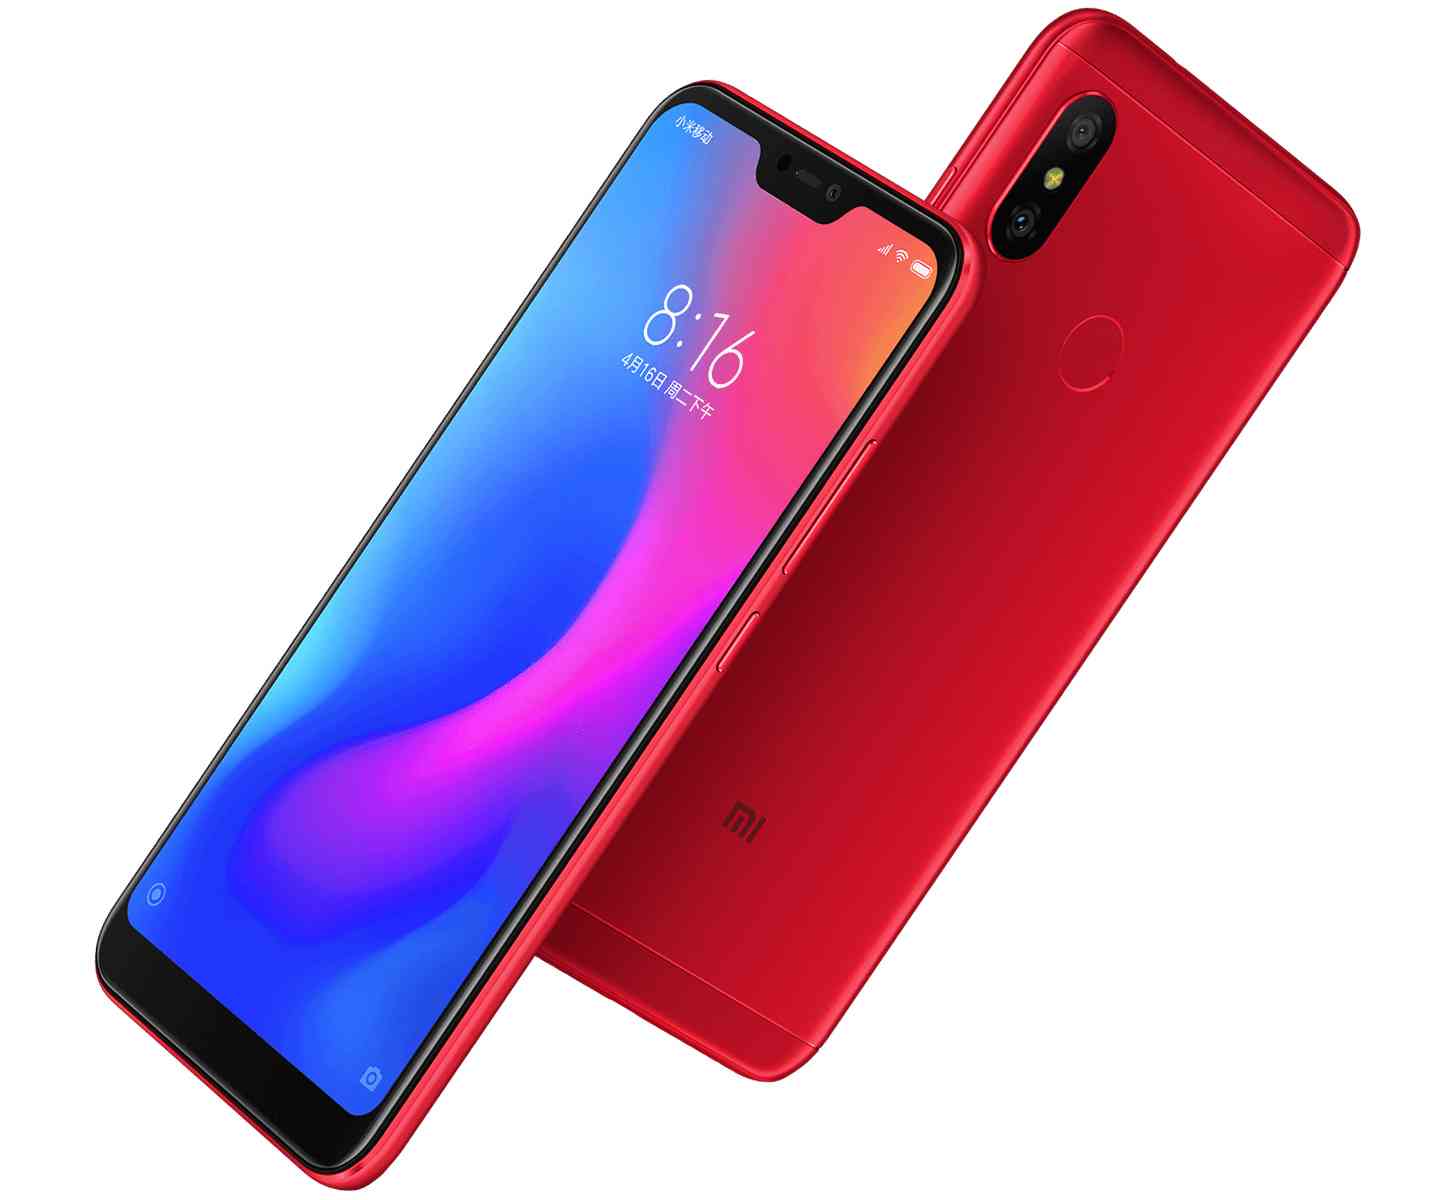 Xiaomi Redmi 6 Pro official red